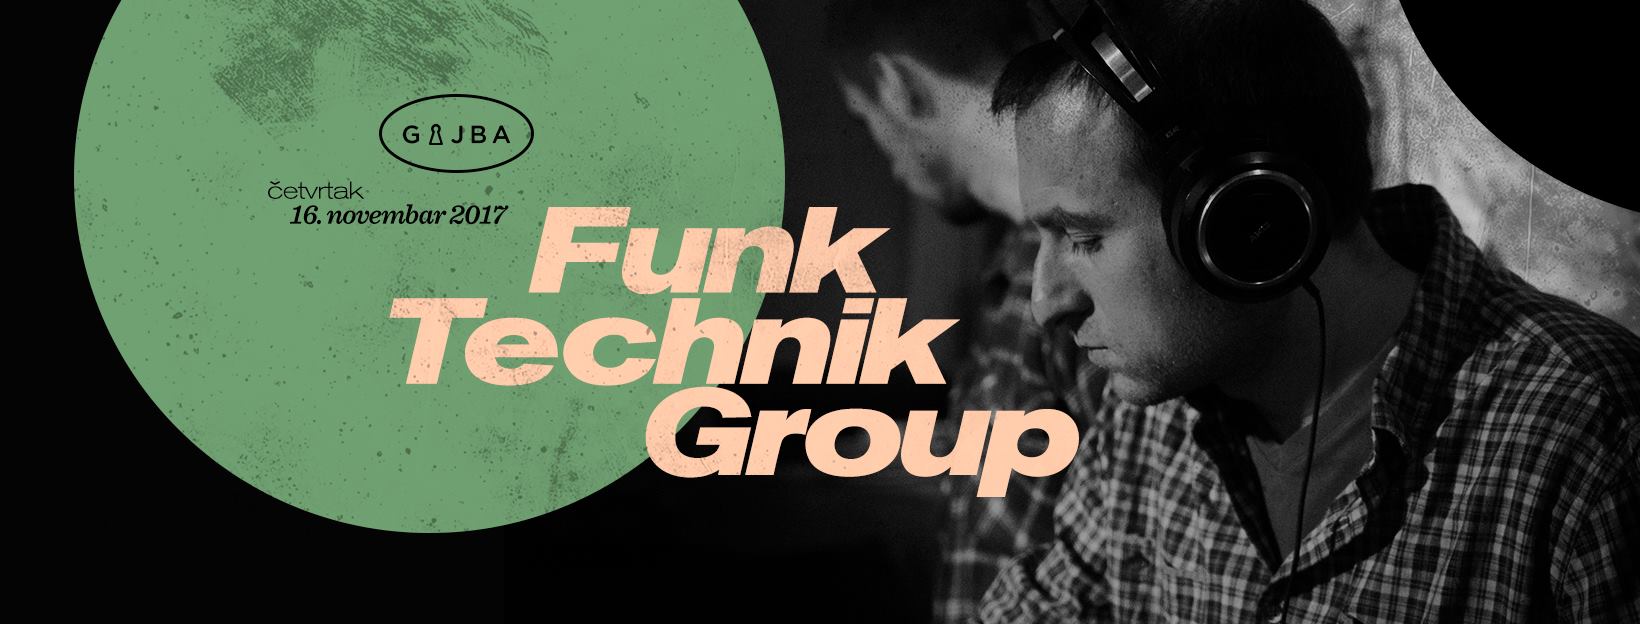 Funk Technik Group 16.11.2017 Gajba